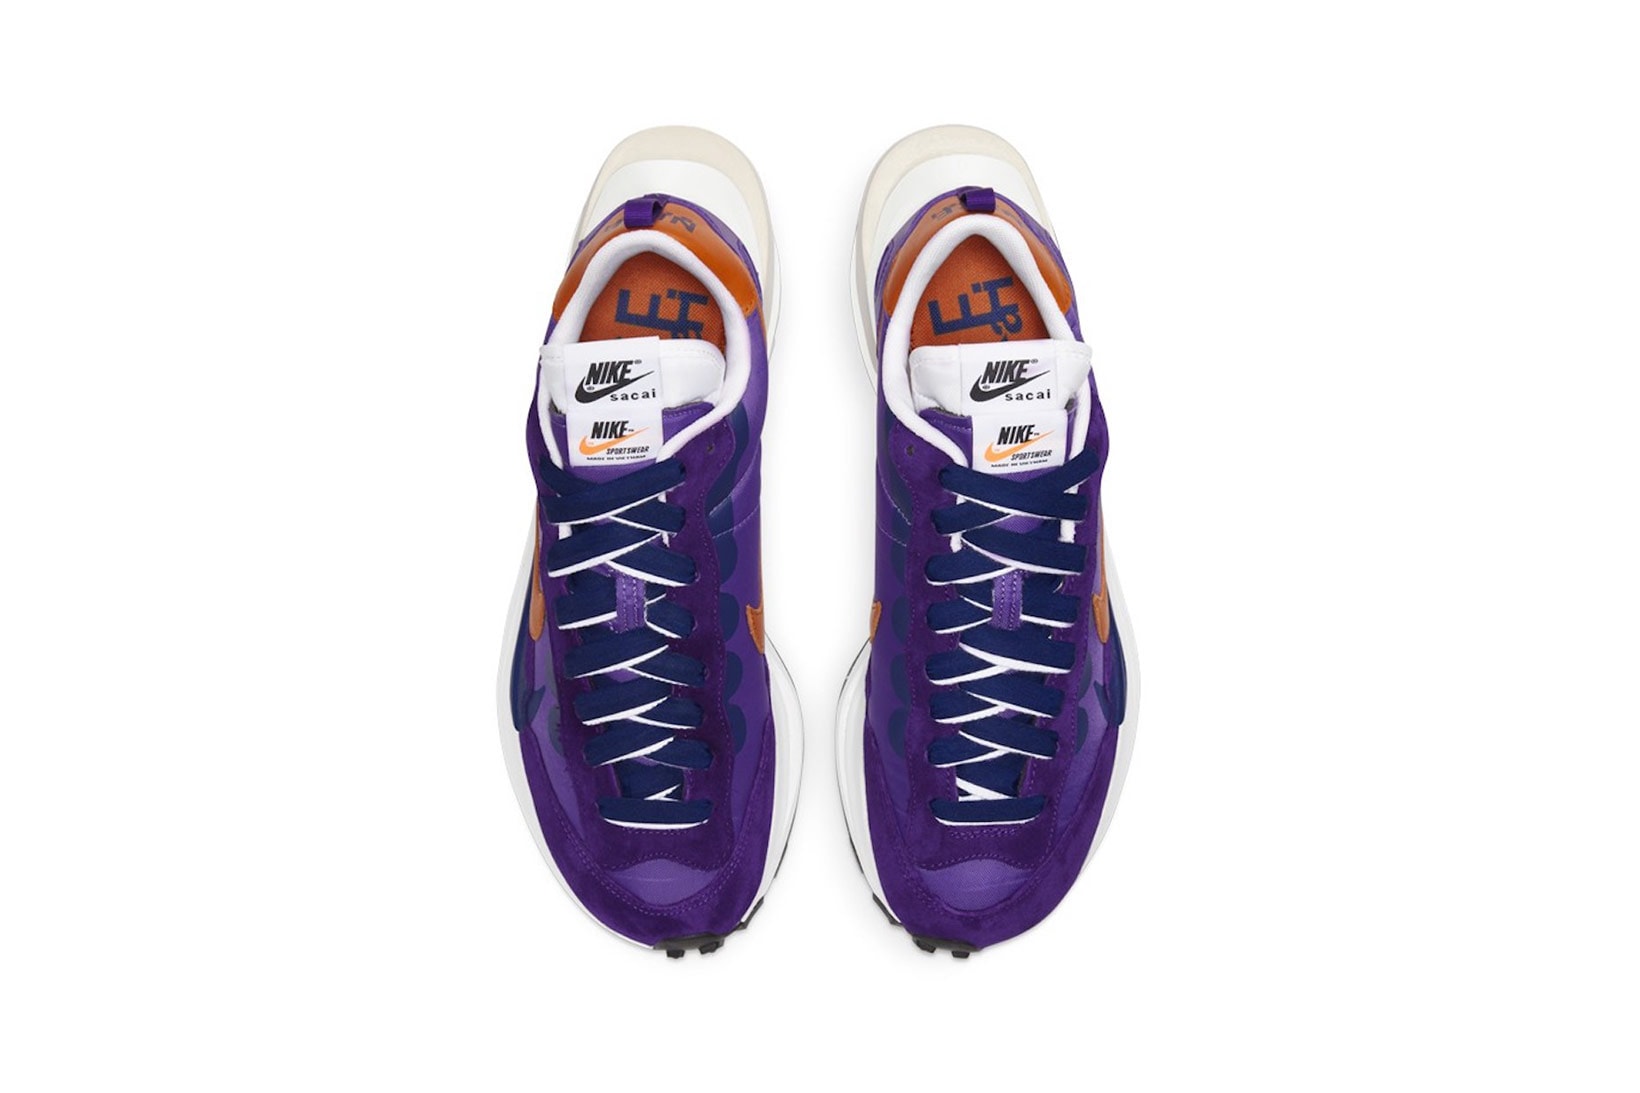 sacai nike vaporwaffle sneakers collaboration dark iris purple orange navy blue white colorway chitose abe footwear sneakers kicks sneakerhead aerial birds eye view